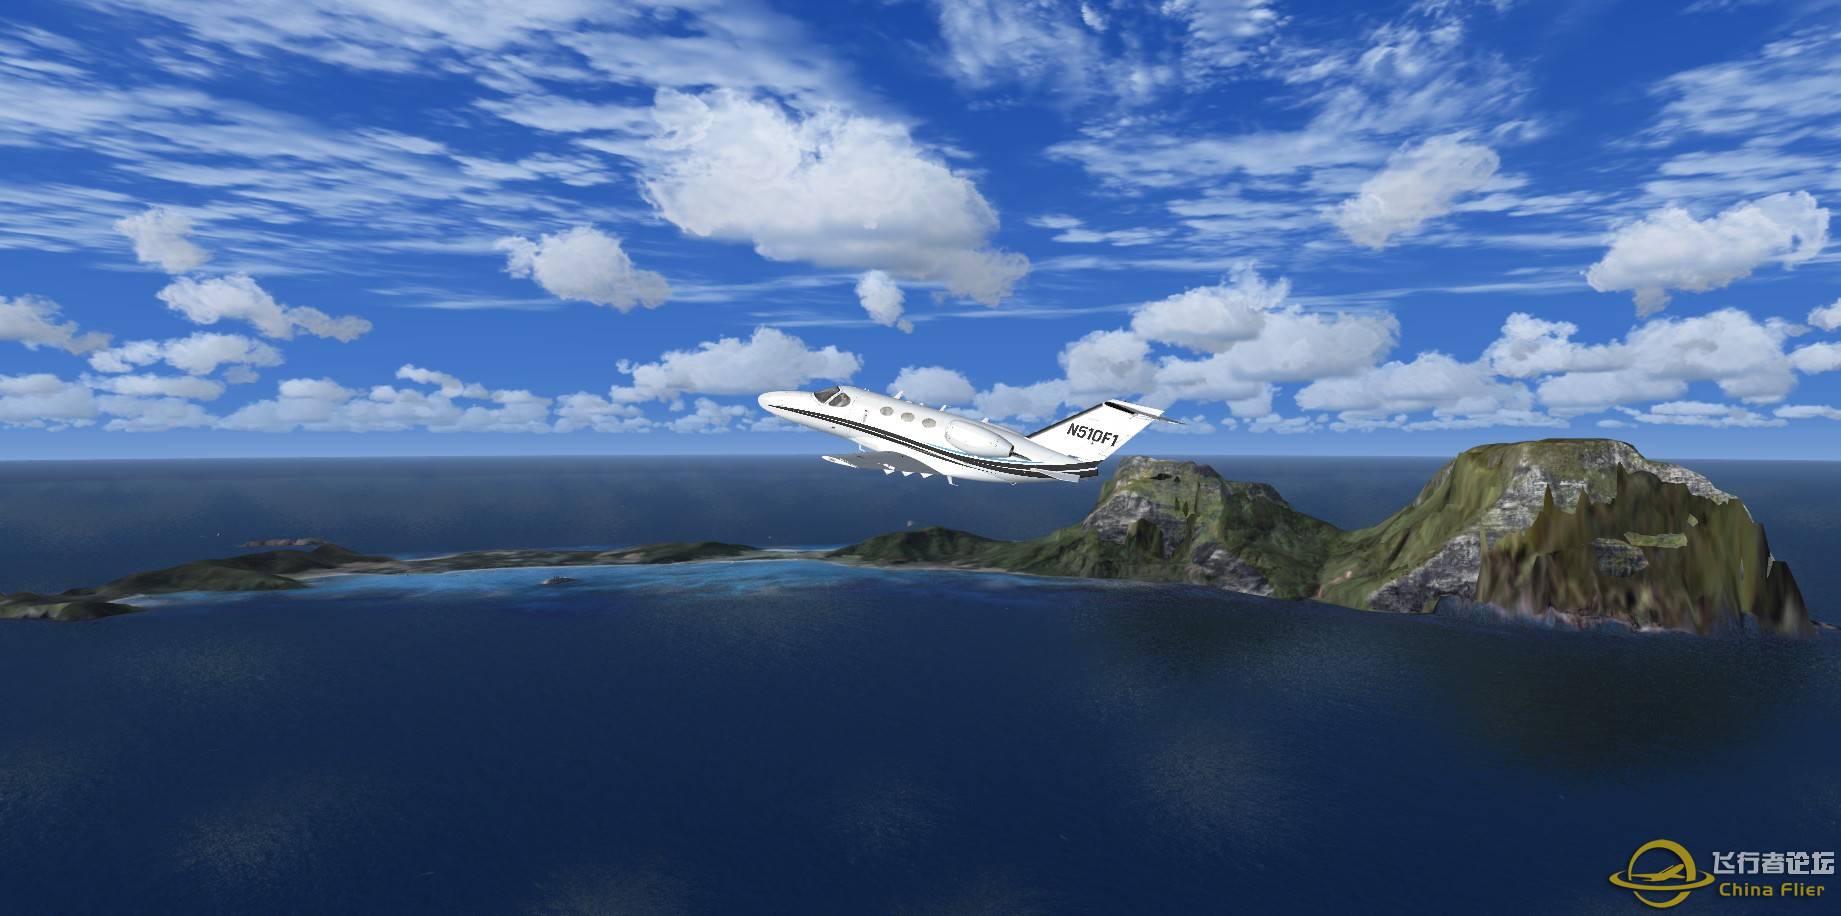 Aerosoft Lord Howe Island 紧邻澳洲的小岛-8787 